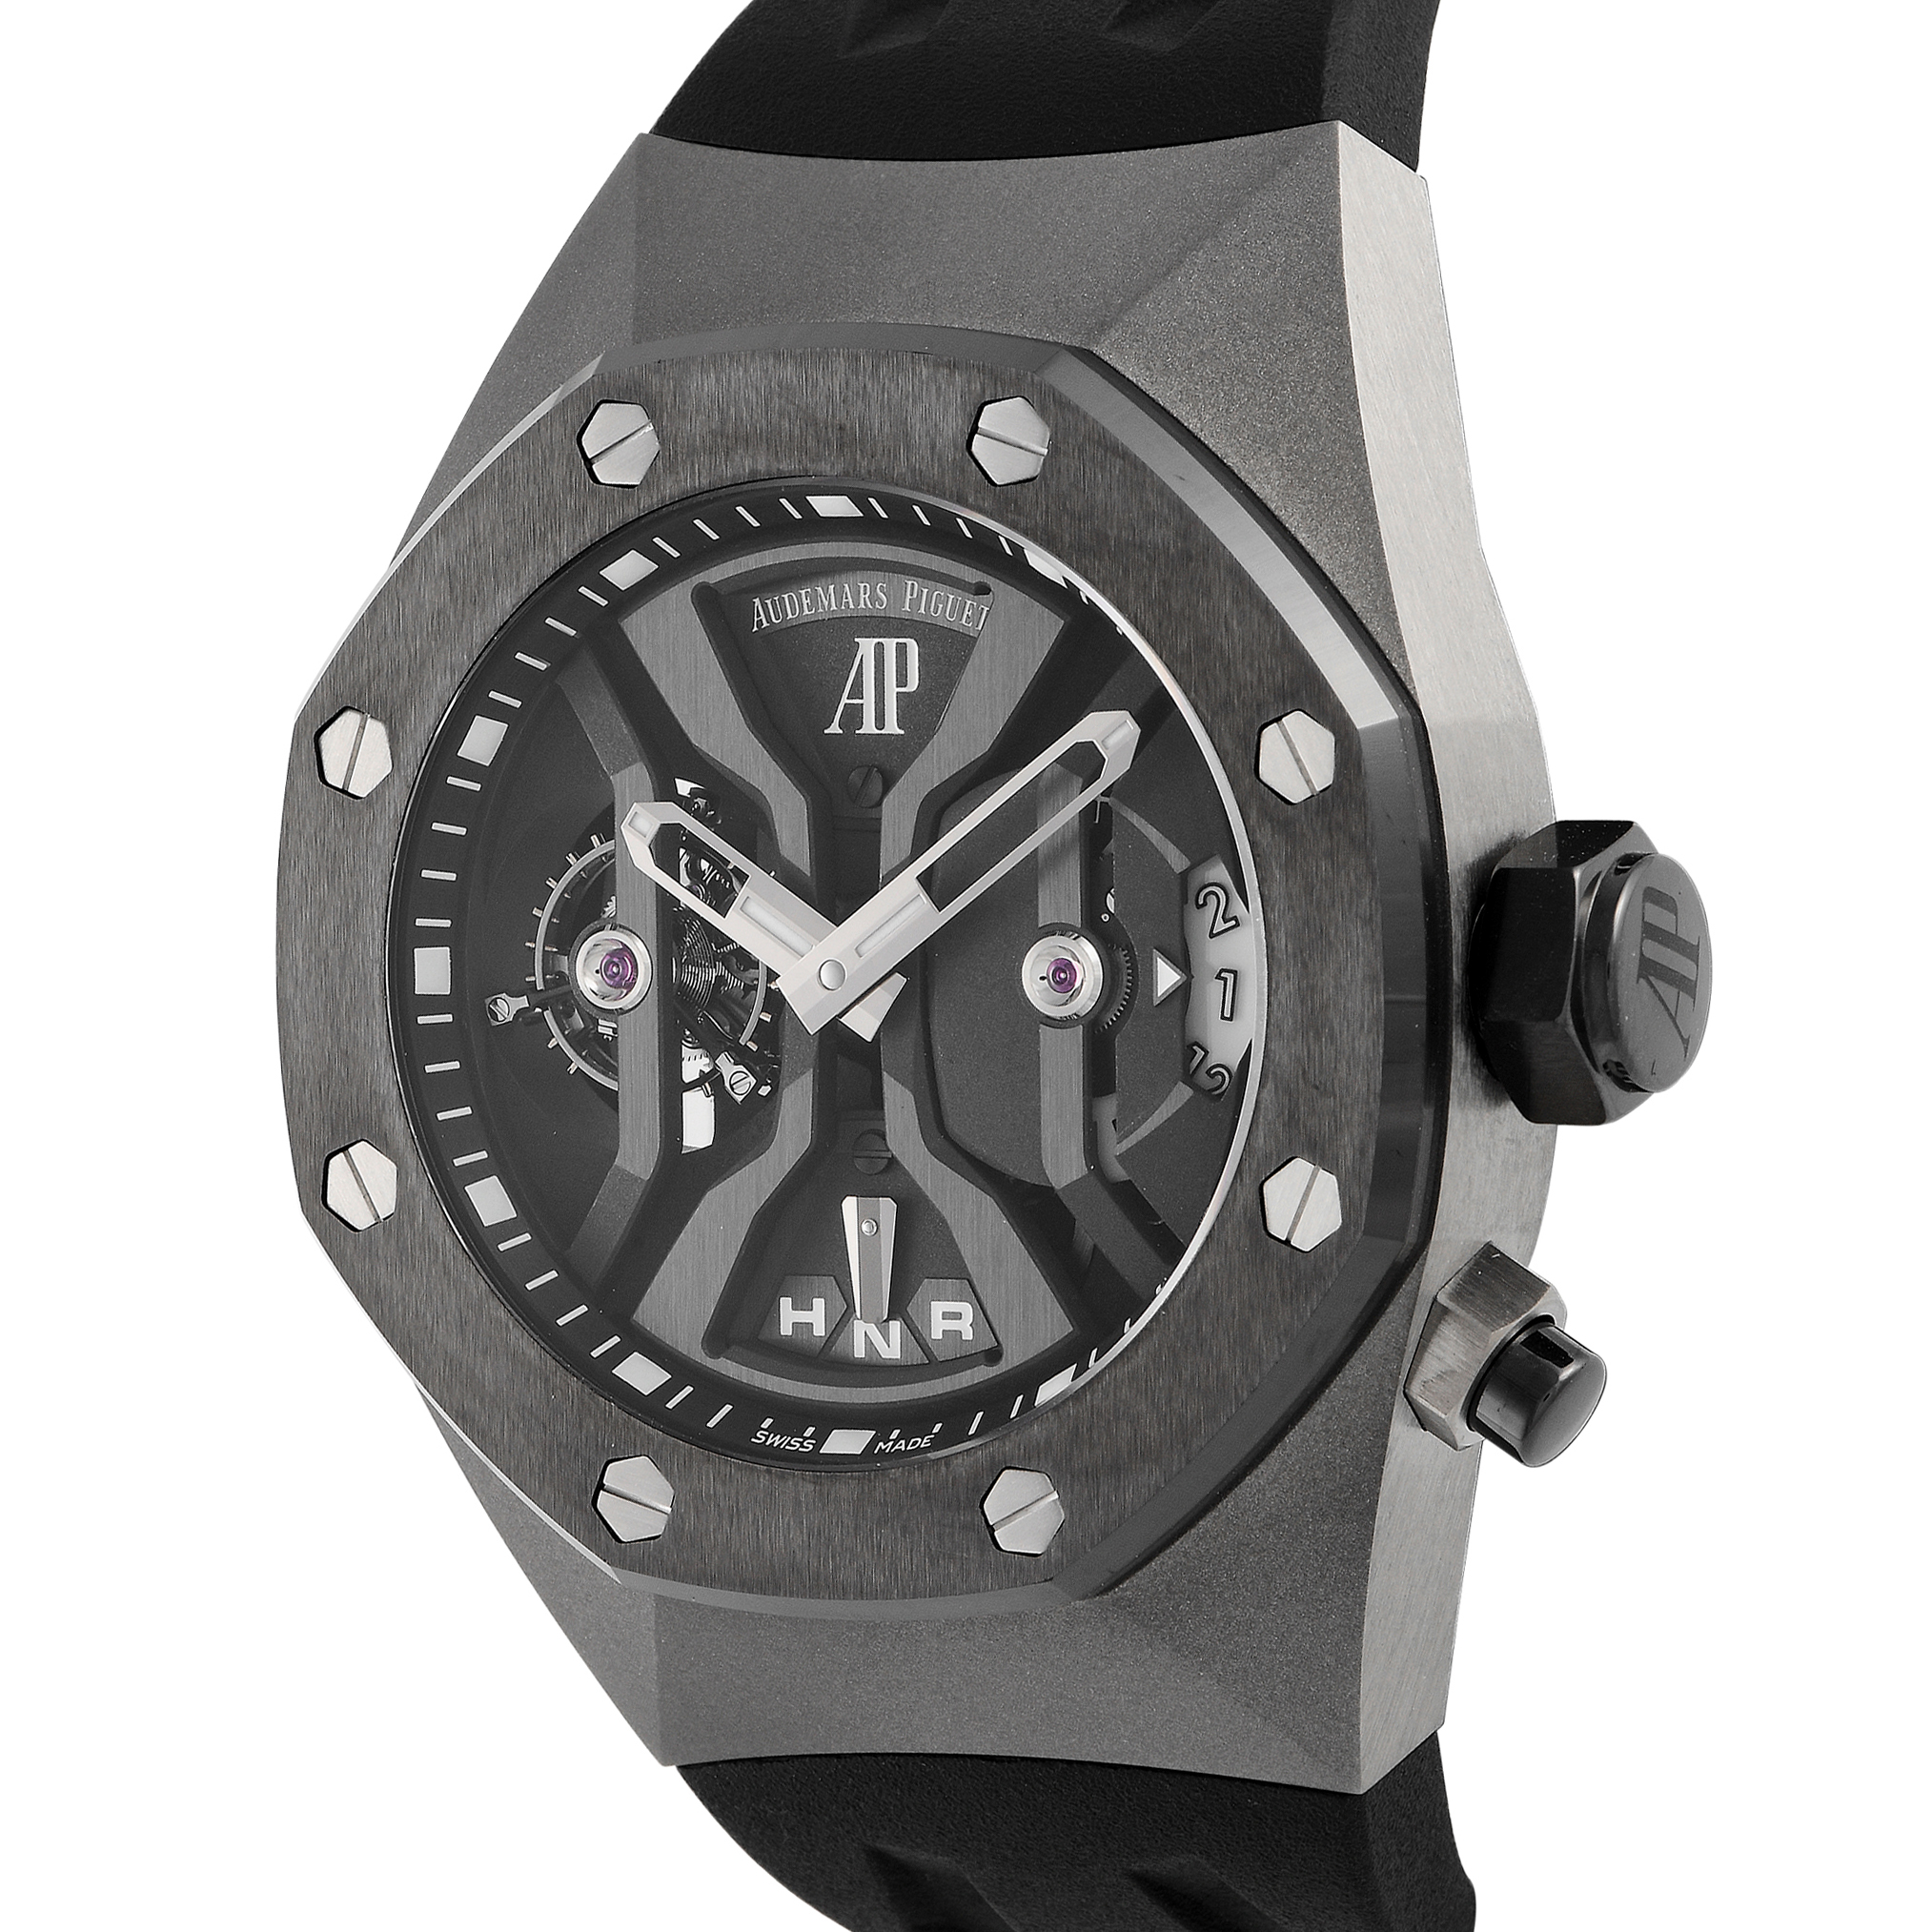 Audemars Piguet Men's Royal Oak Concept GMT Tourbillon Watch in Black/Skeleton, Titanium, Manual Wind | Govberg 26560IO.OO.D002CA.01